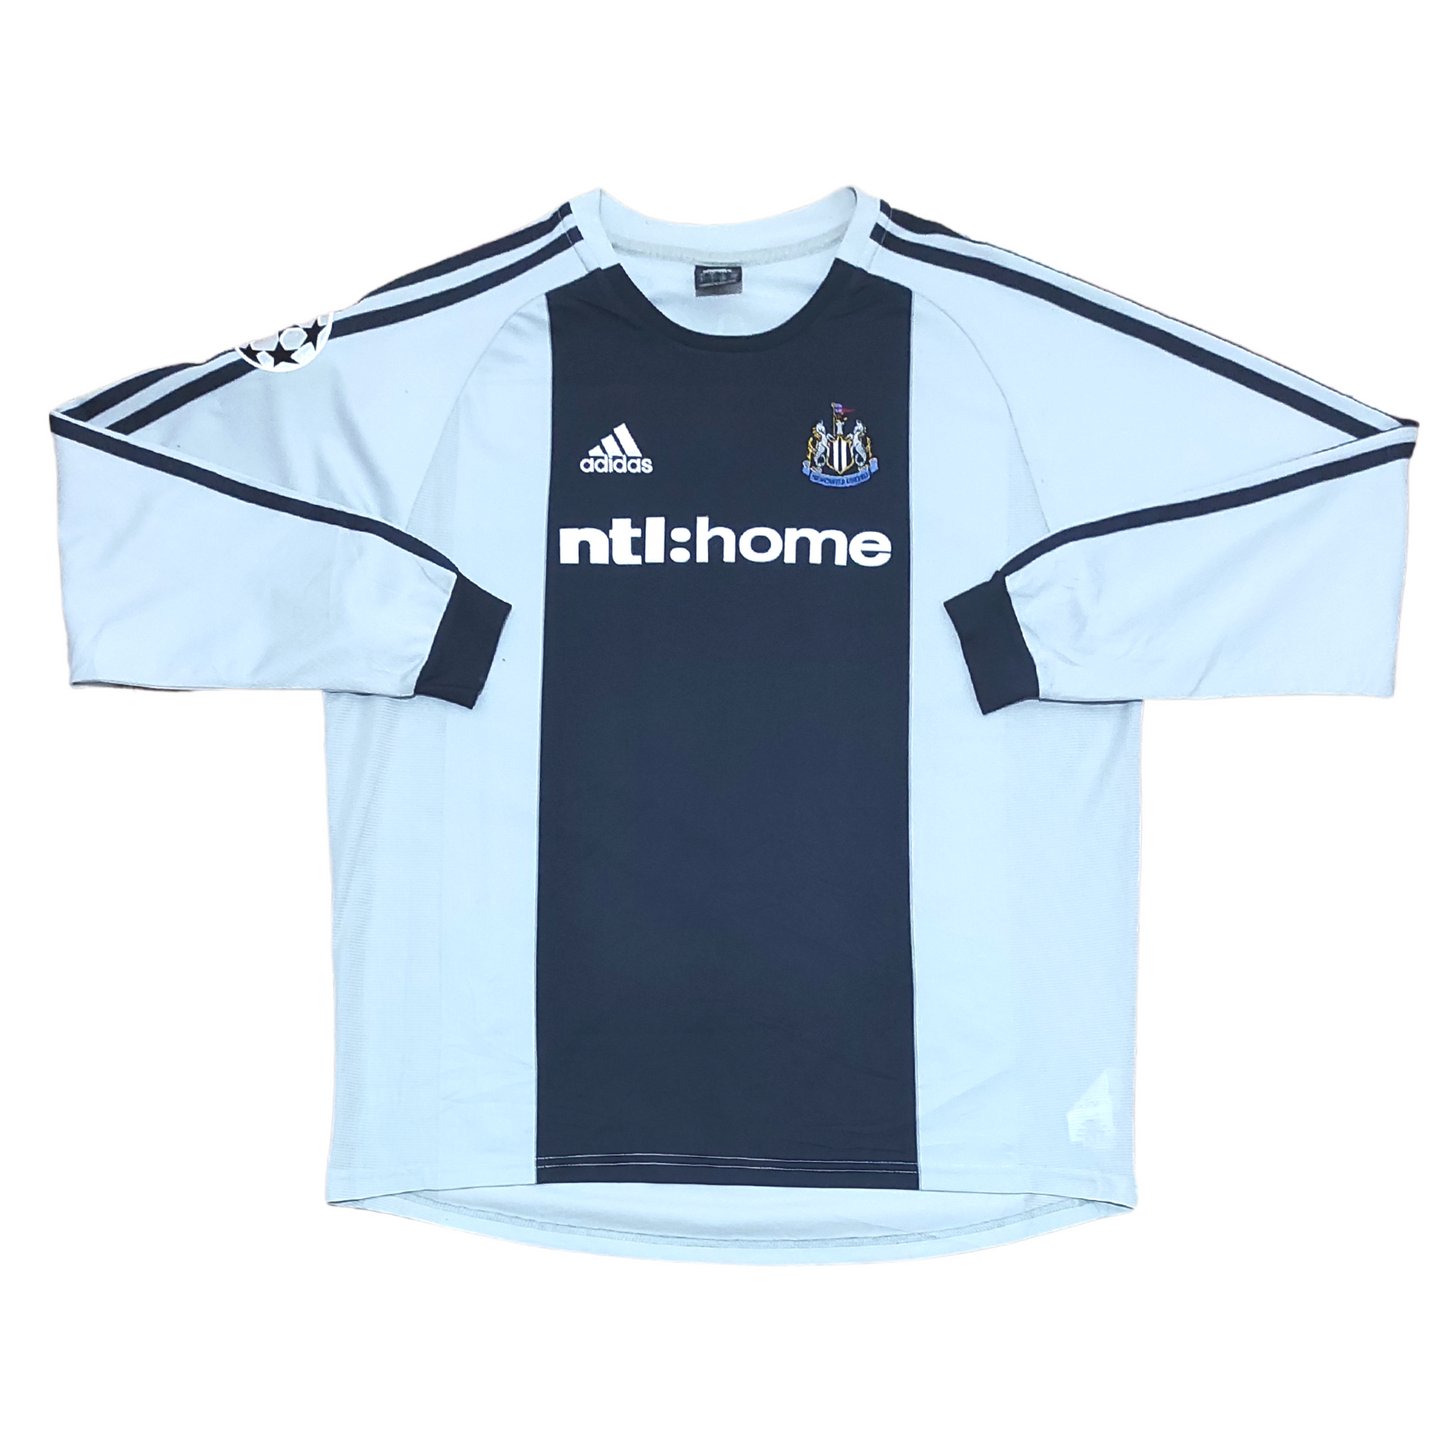 Newcastle Away L/S Shirt 2002-2003 Shearer (L)